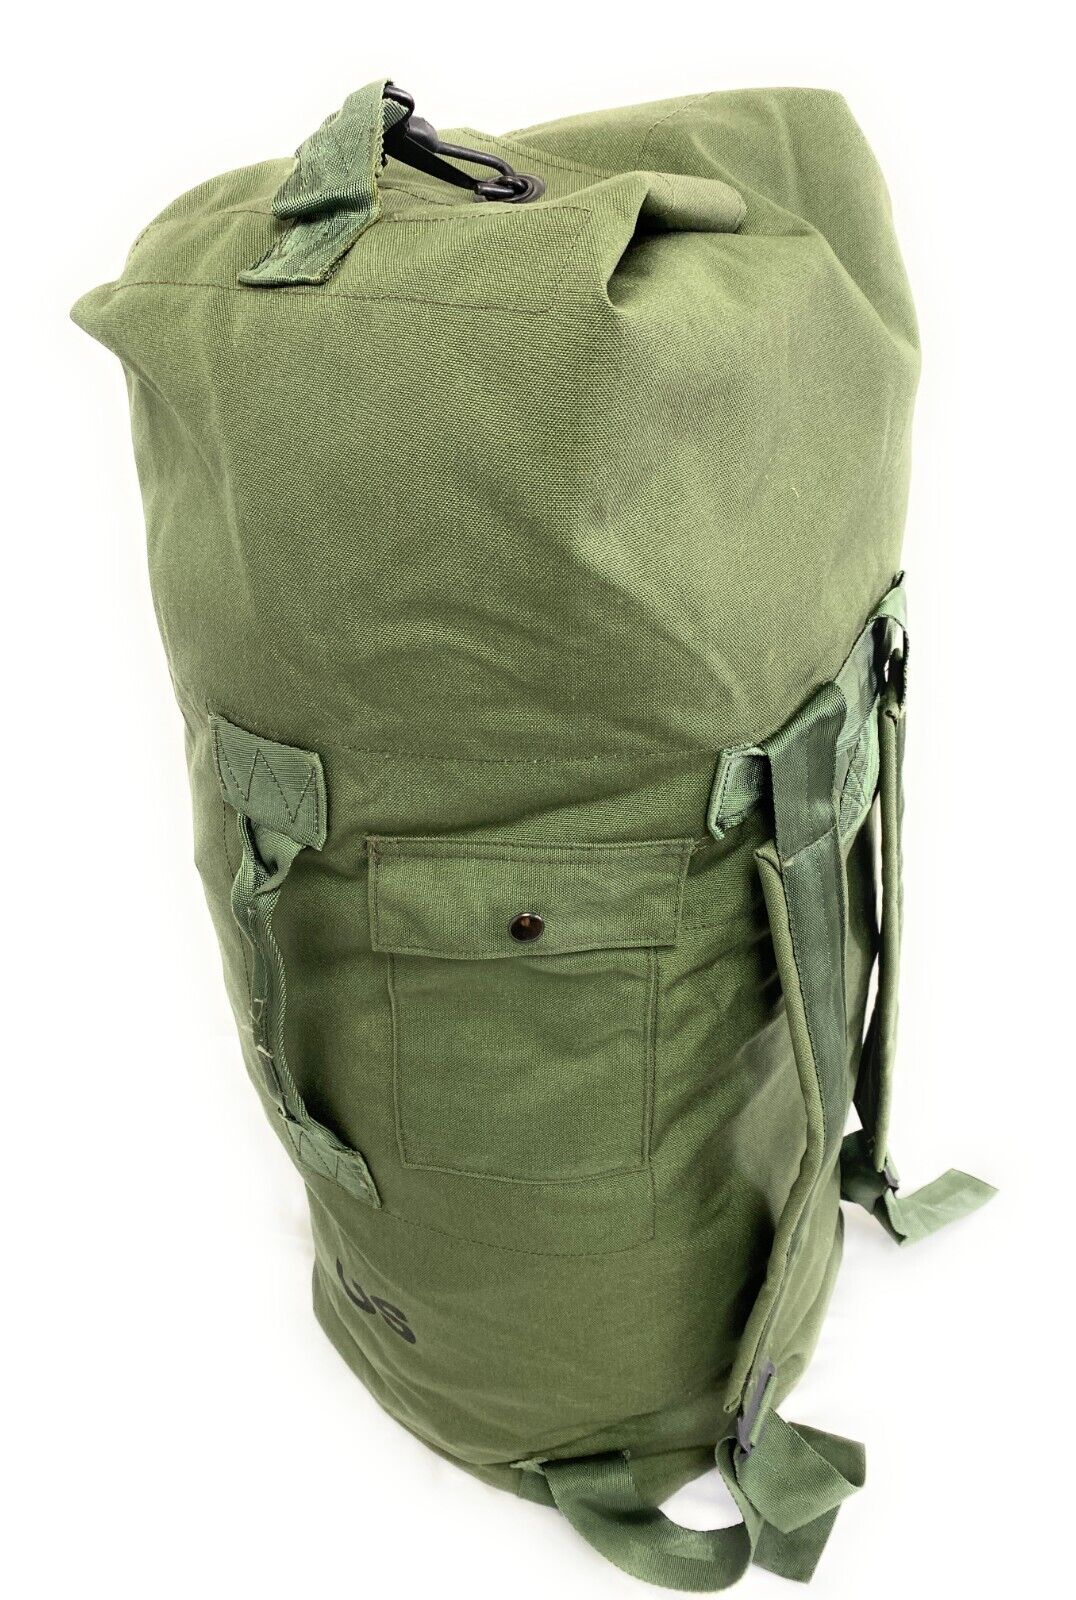 Military Duffle Bag, OD Green Nylon Sea Bag Carry Straps Army 8465-01-117-8699